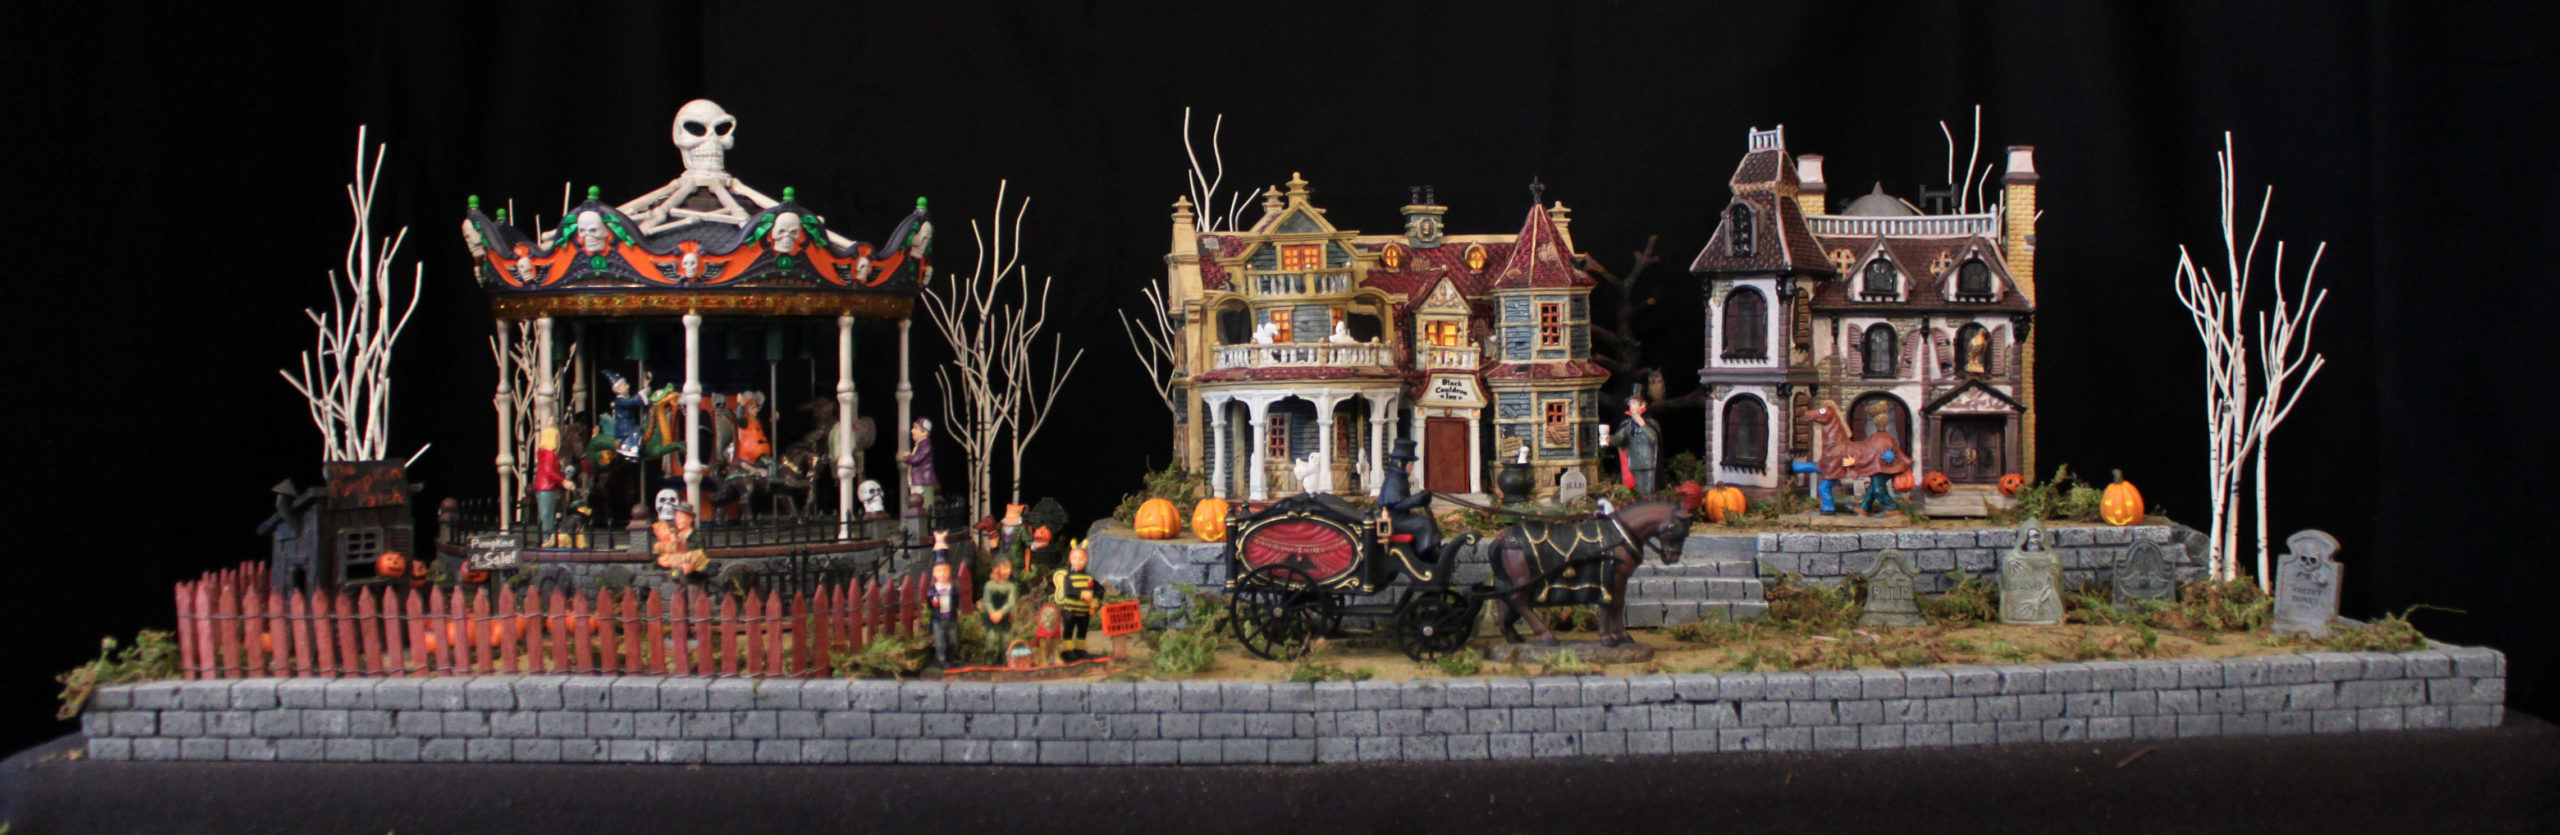 Halloween Village Display Platform